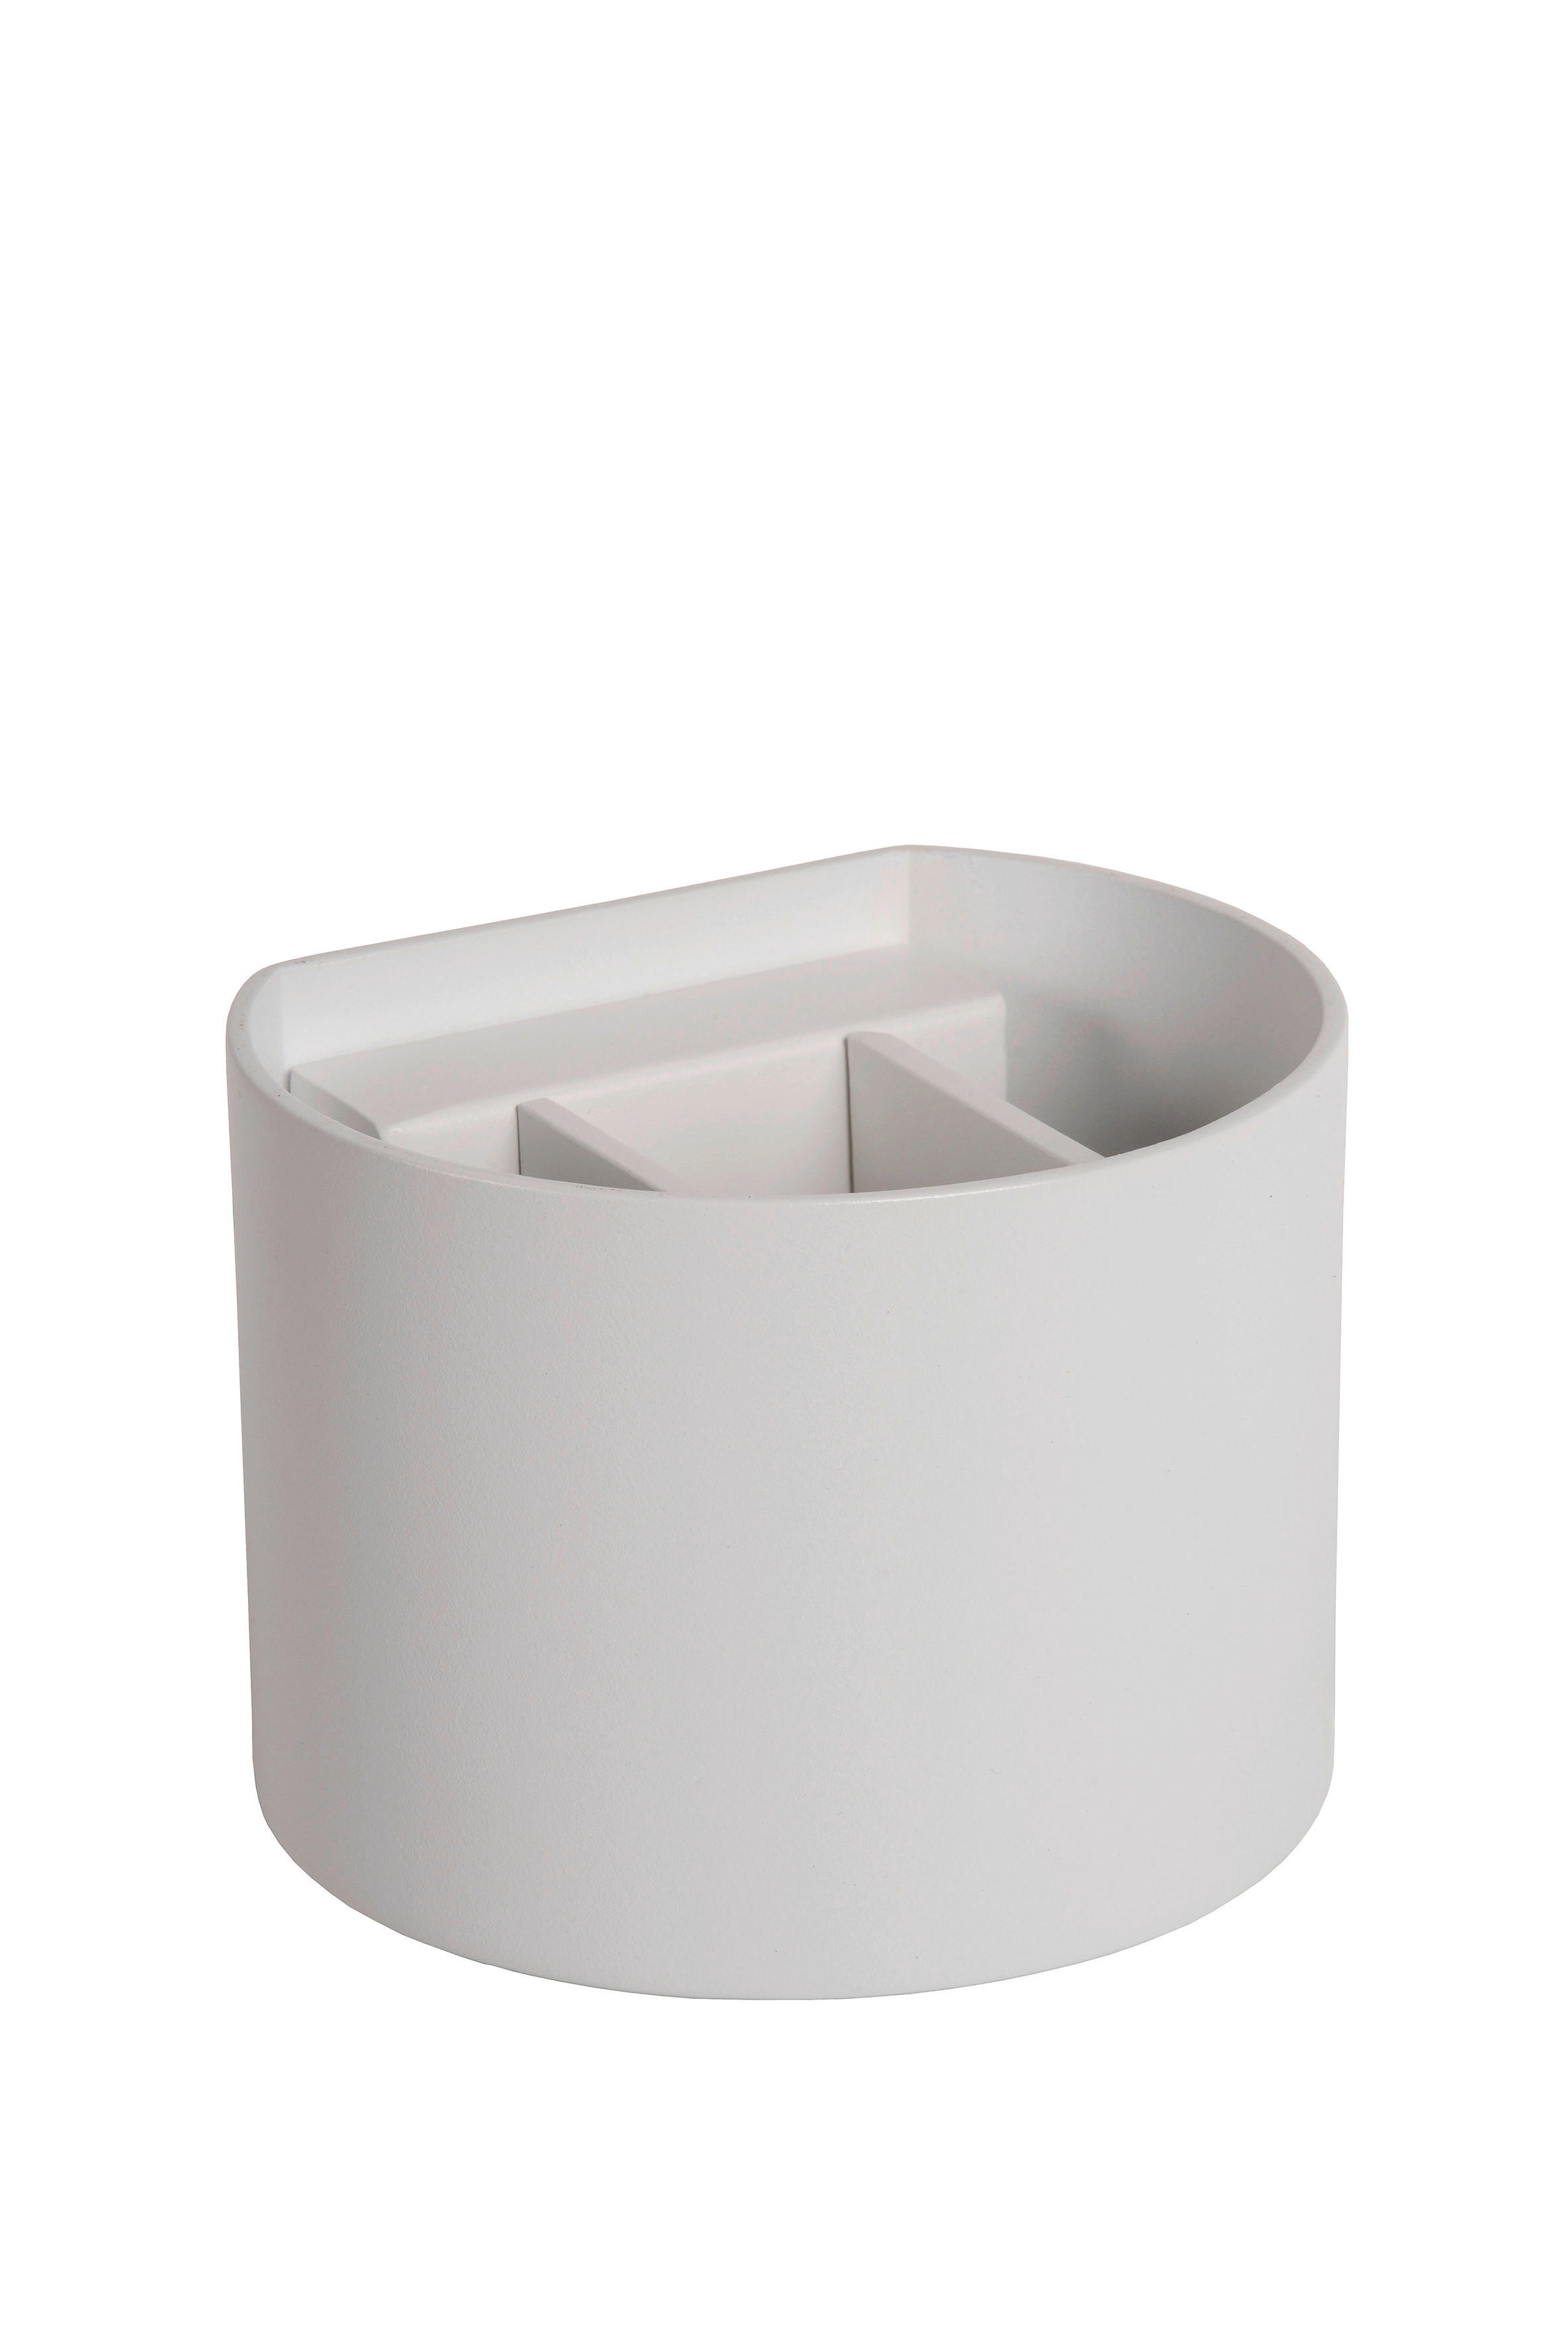 LED-WANDLEUCHTE XIO 11/13/9.7 cm   - Weiß, Design, Metall (11/13/9.7cm) - Lucide